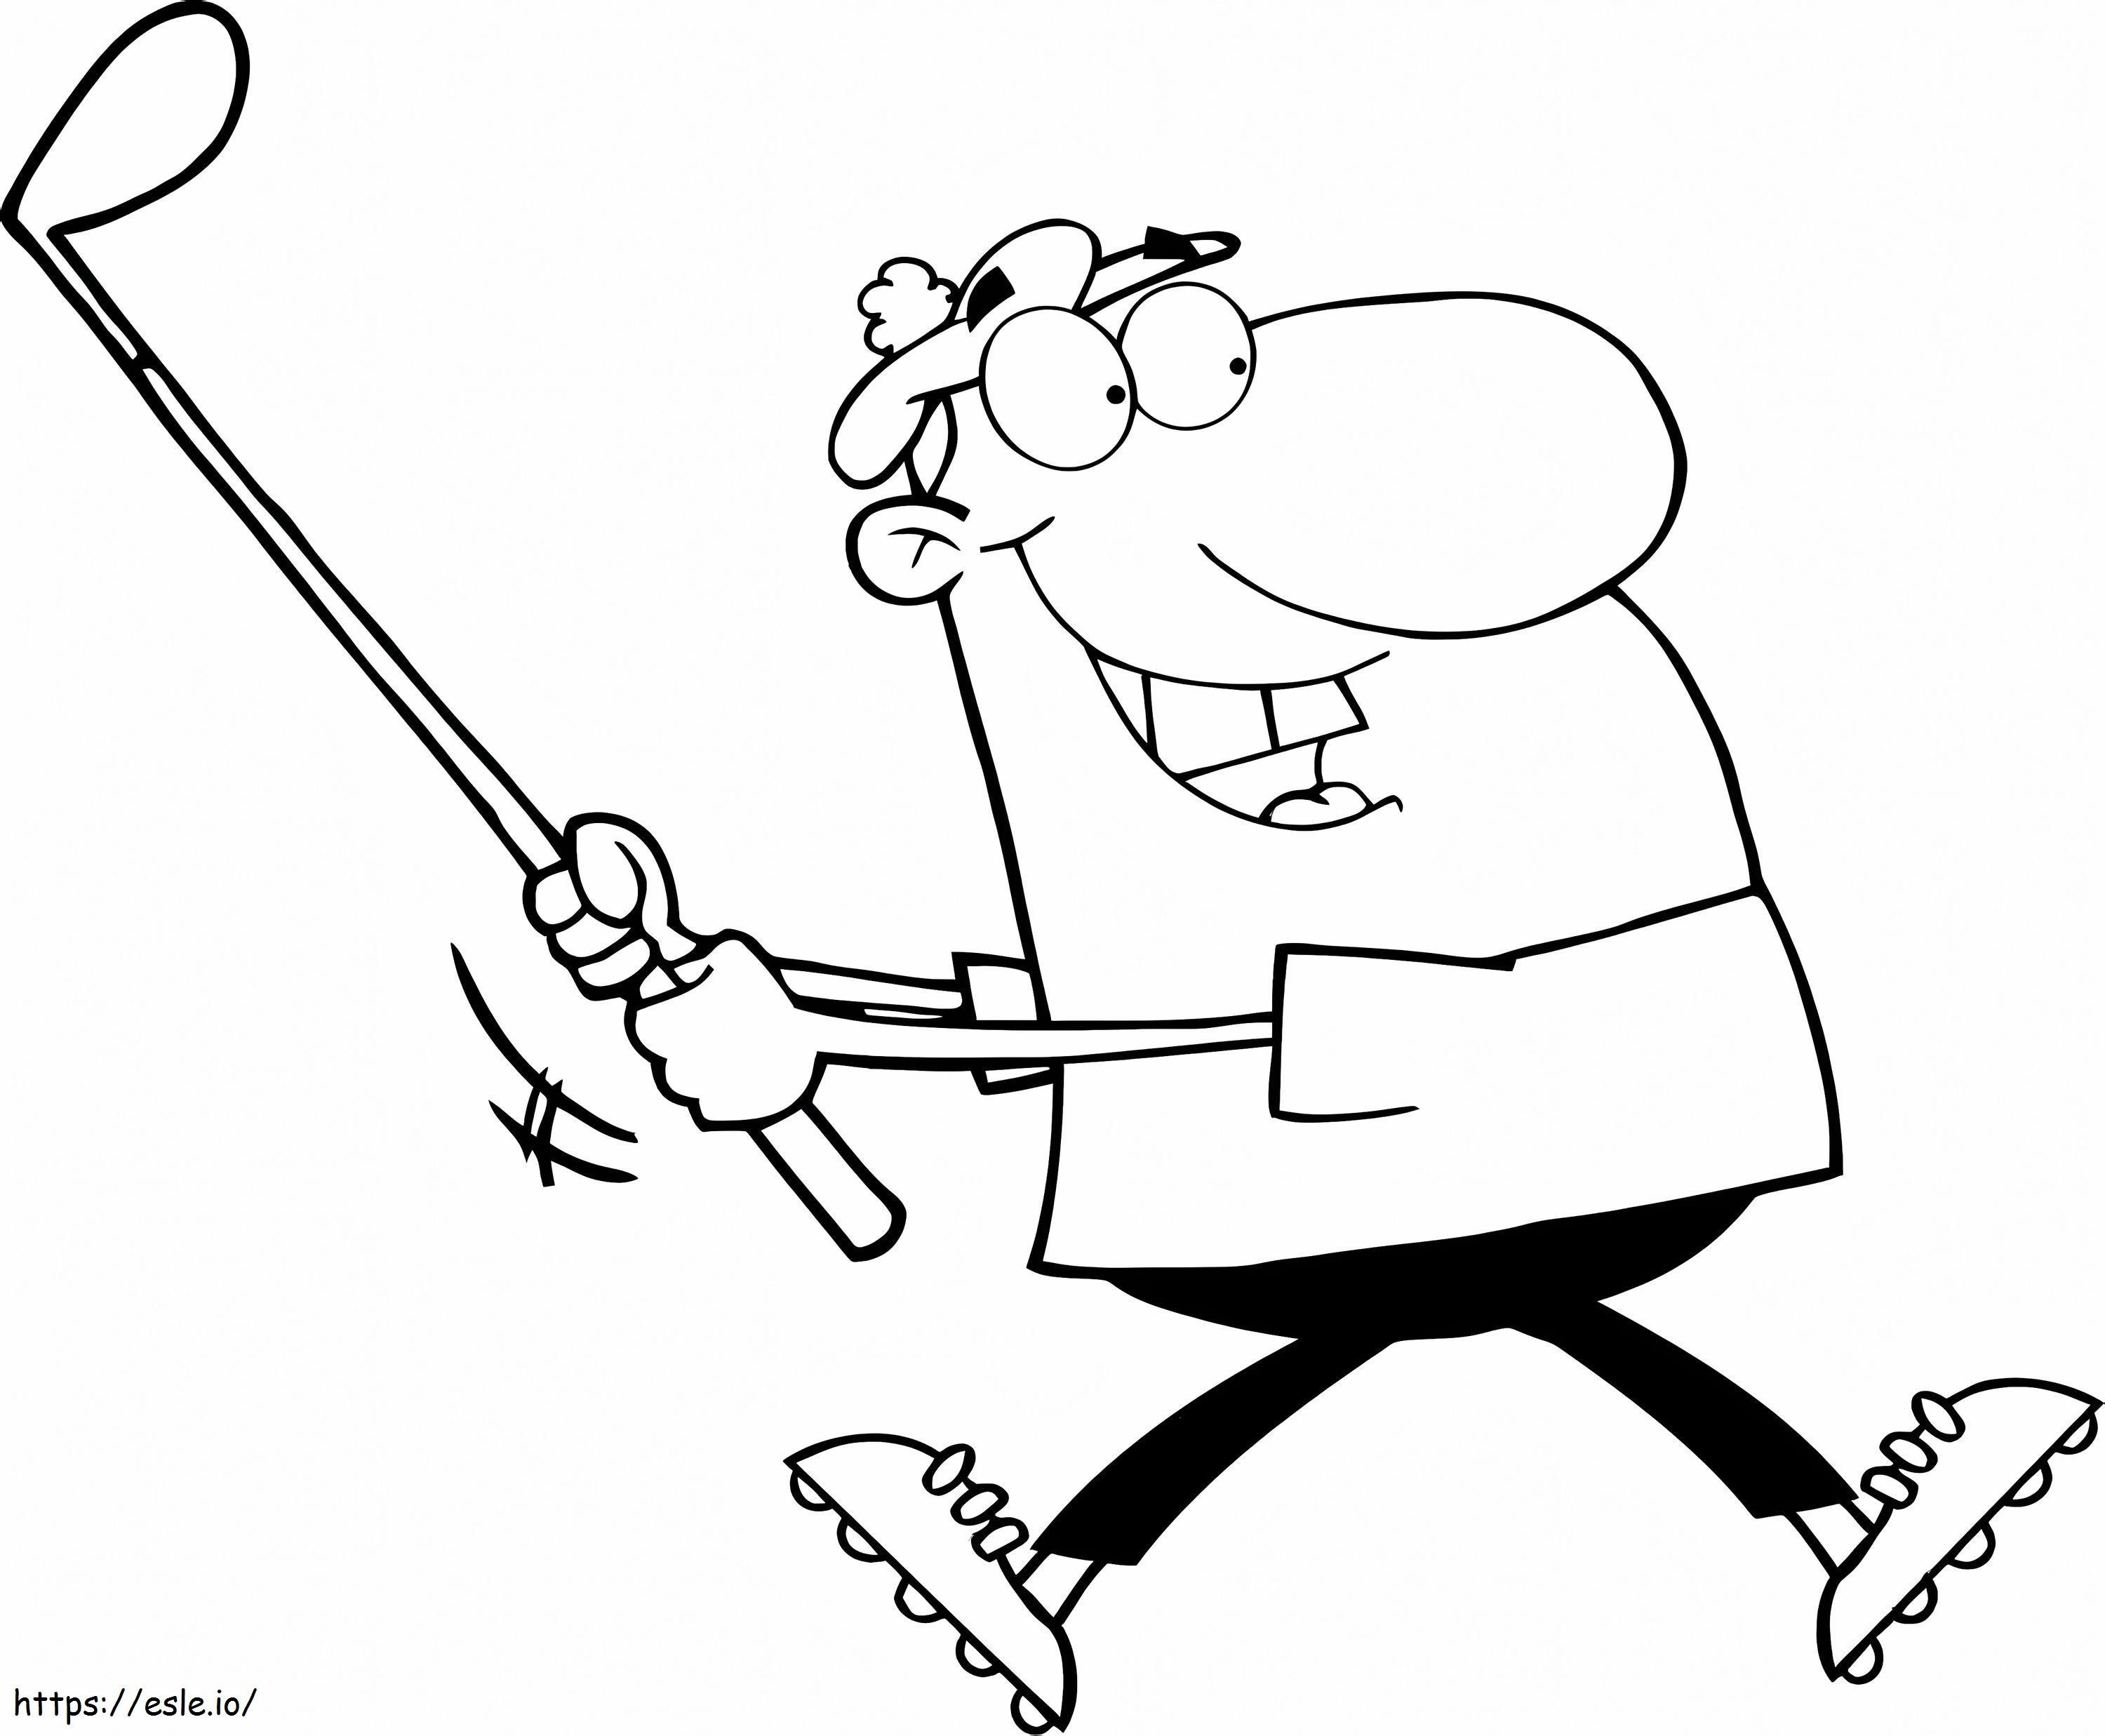 Cartoon Man Playing Golf coloring page